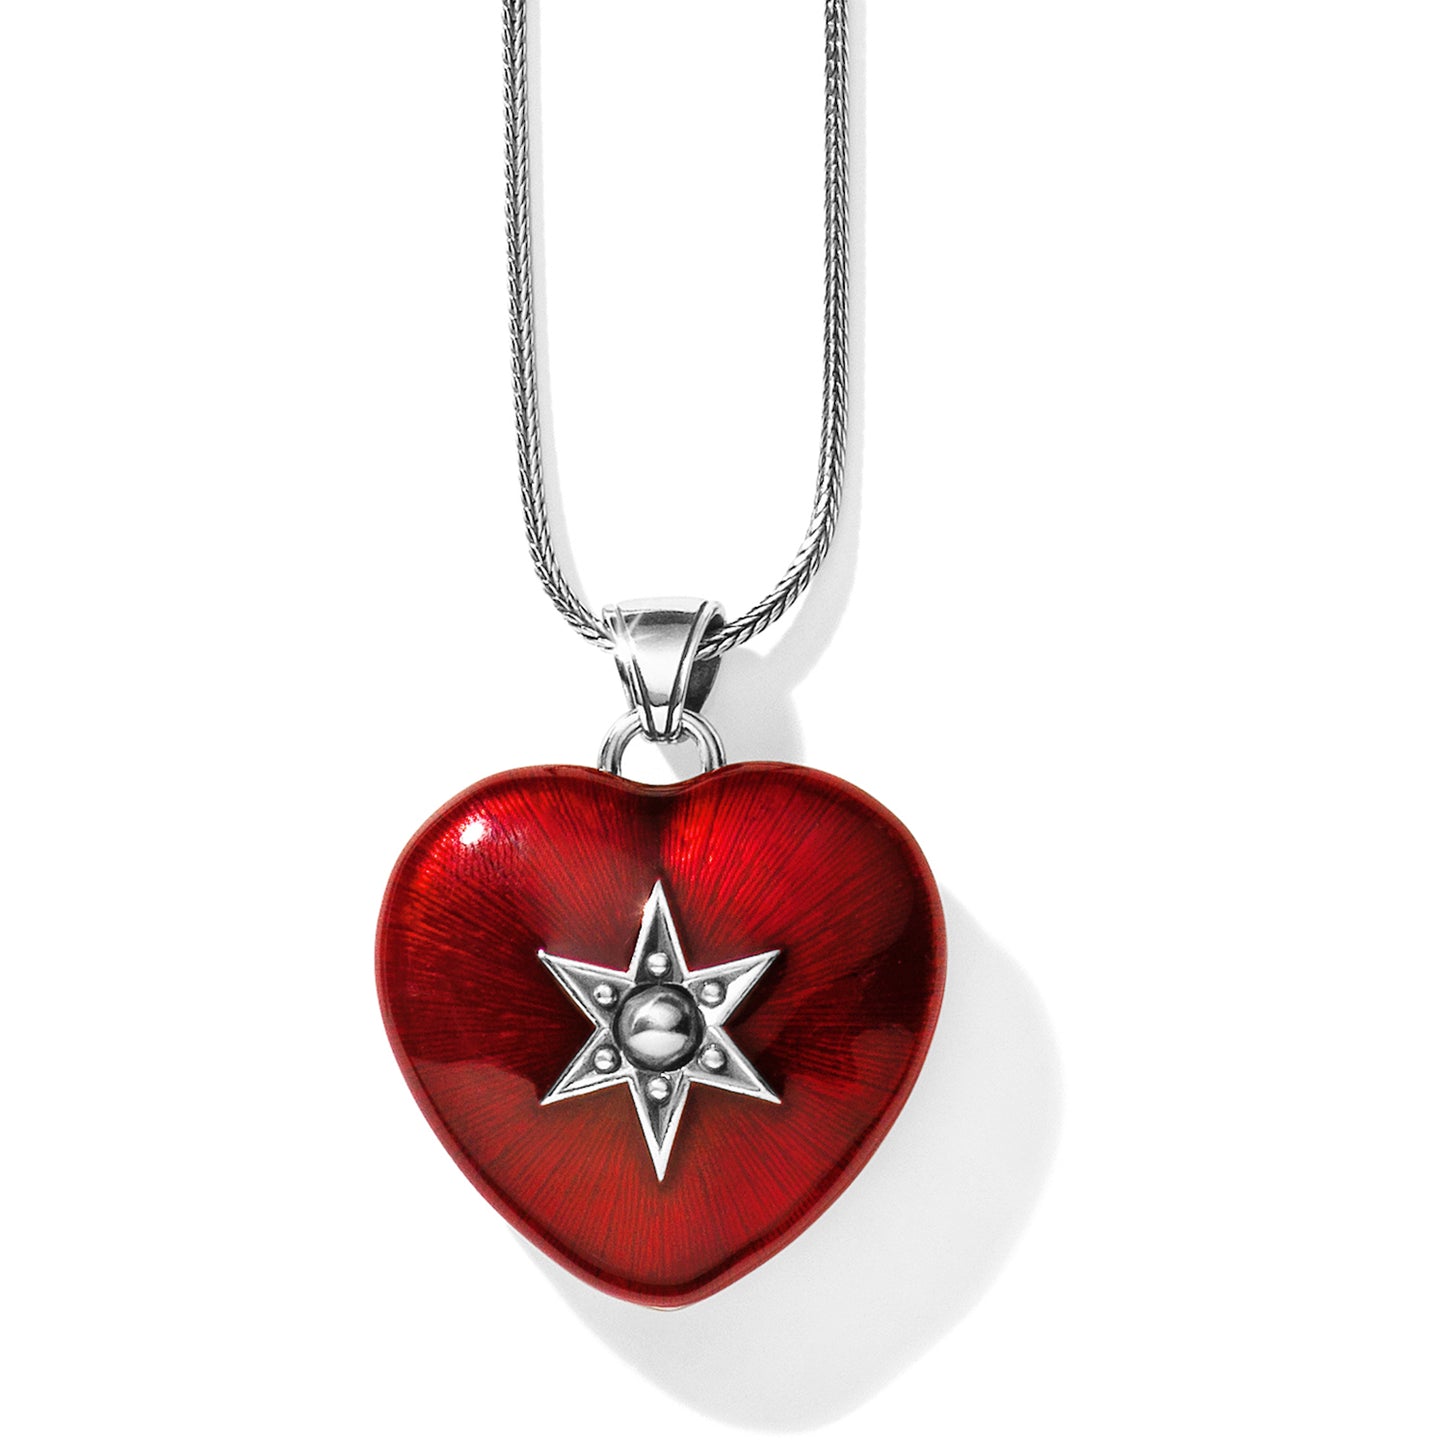 Loving Heart Convertible Locket Necklace